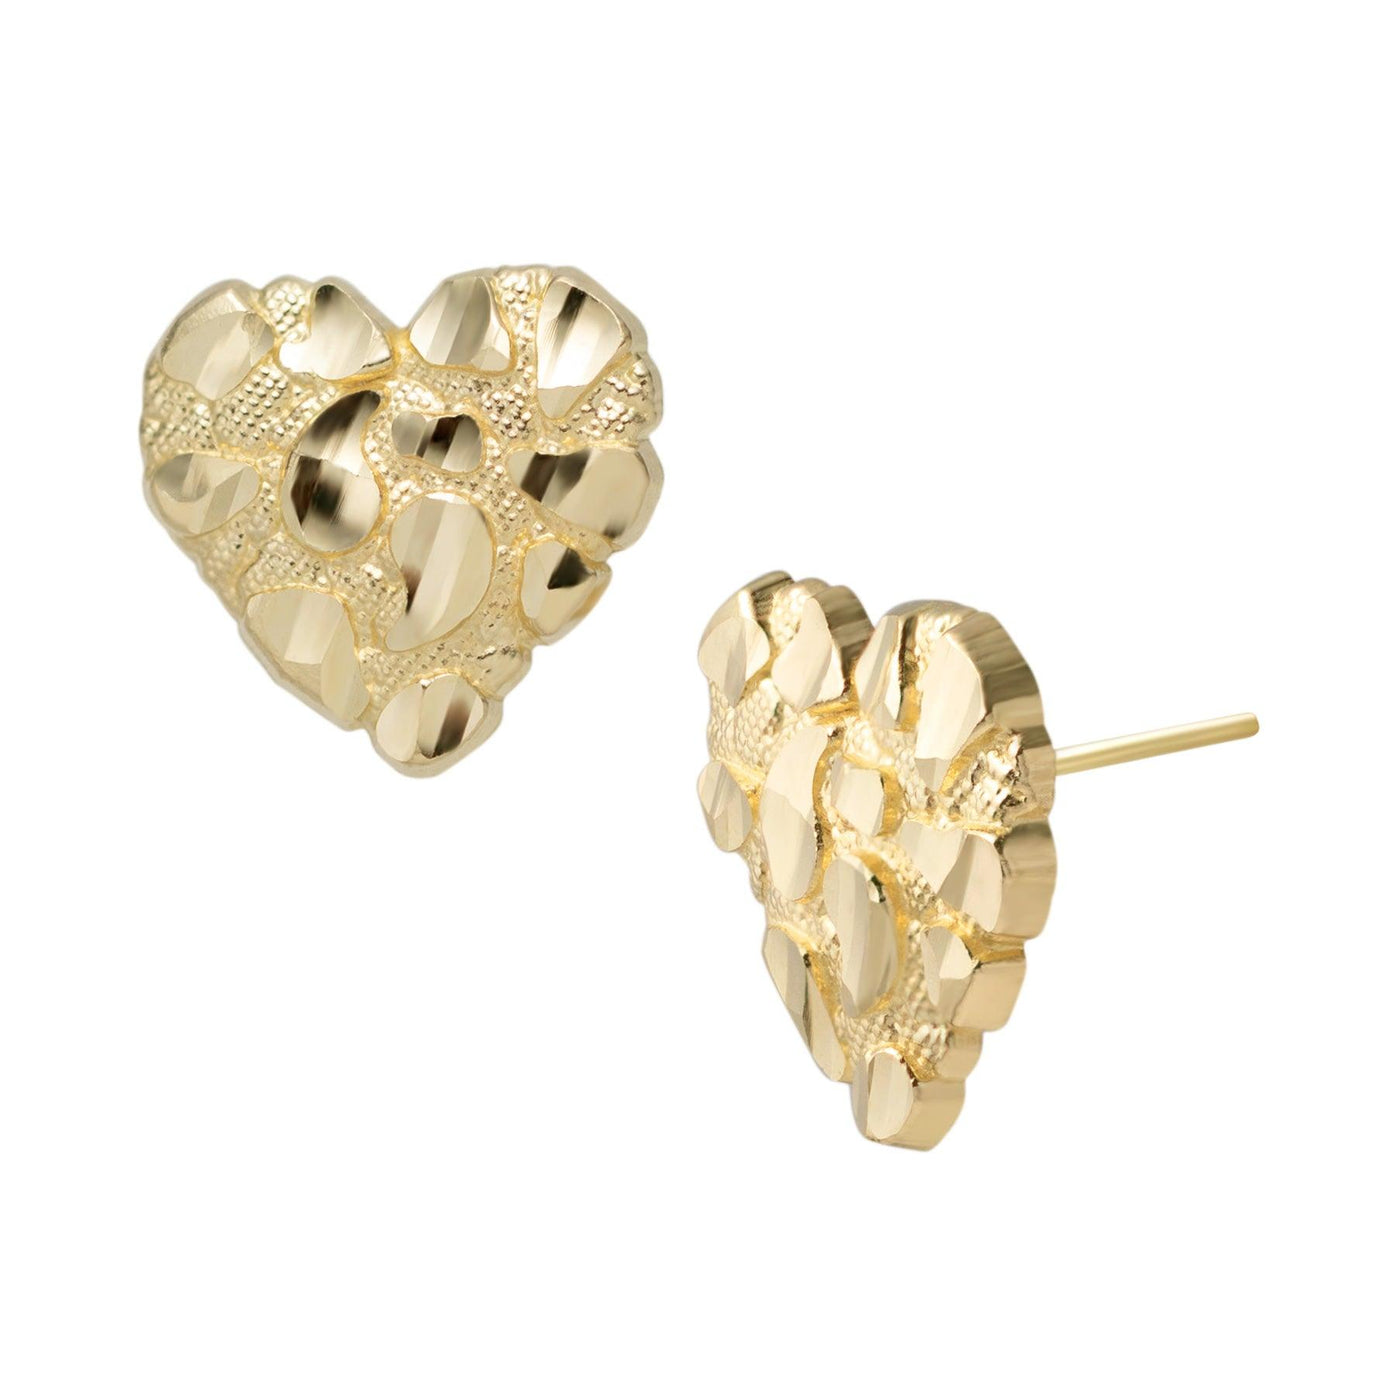 Women's Large Heart Shape Nugget Stud Earrings Solid 10K Yellow Gold - bayamjewelry